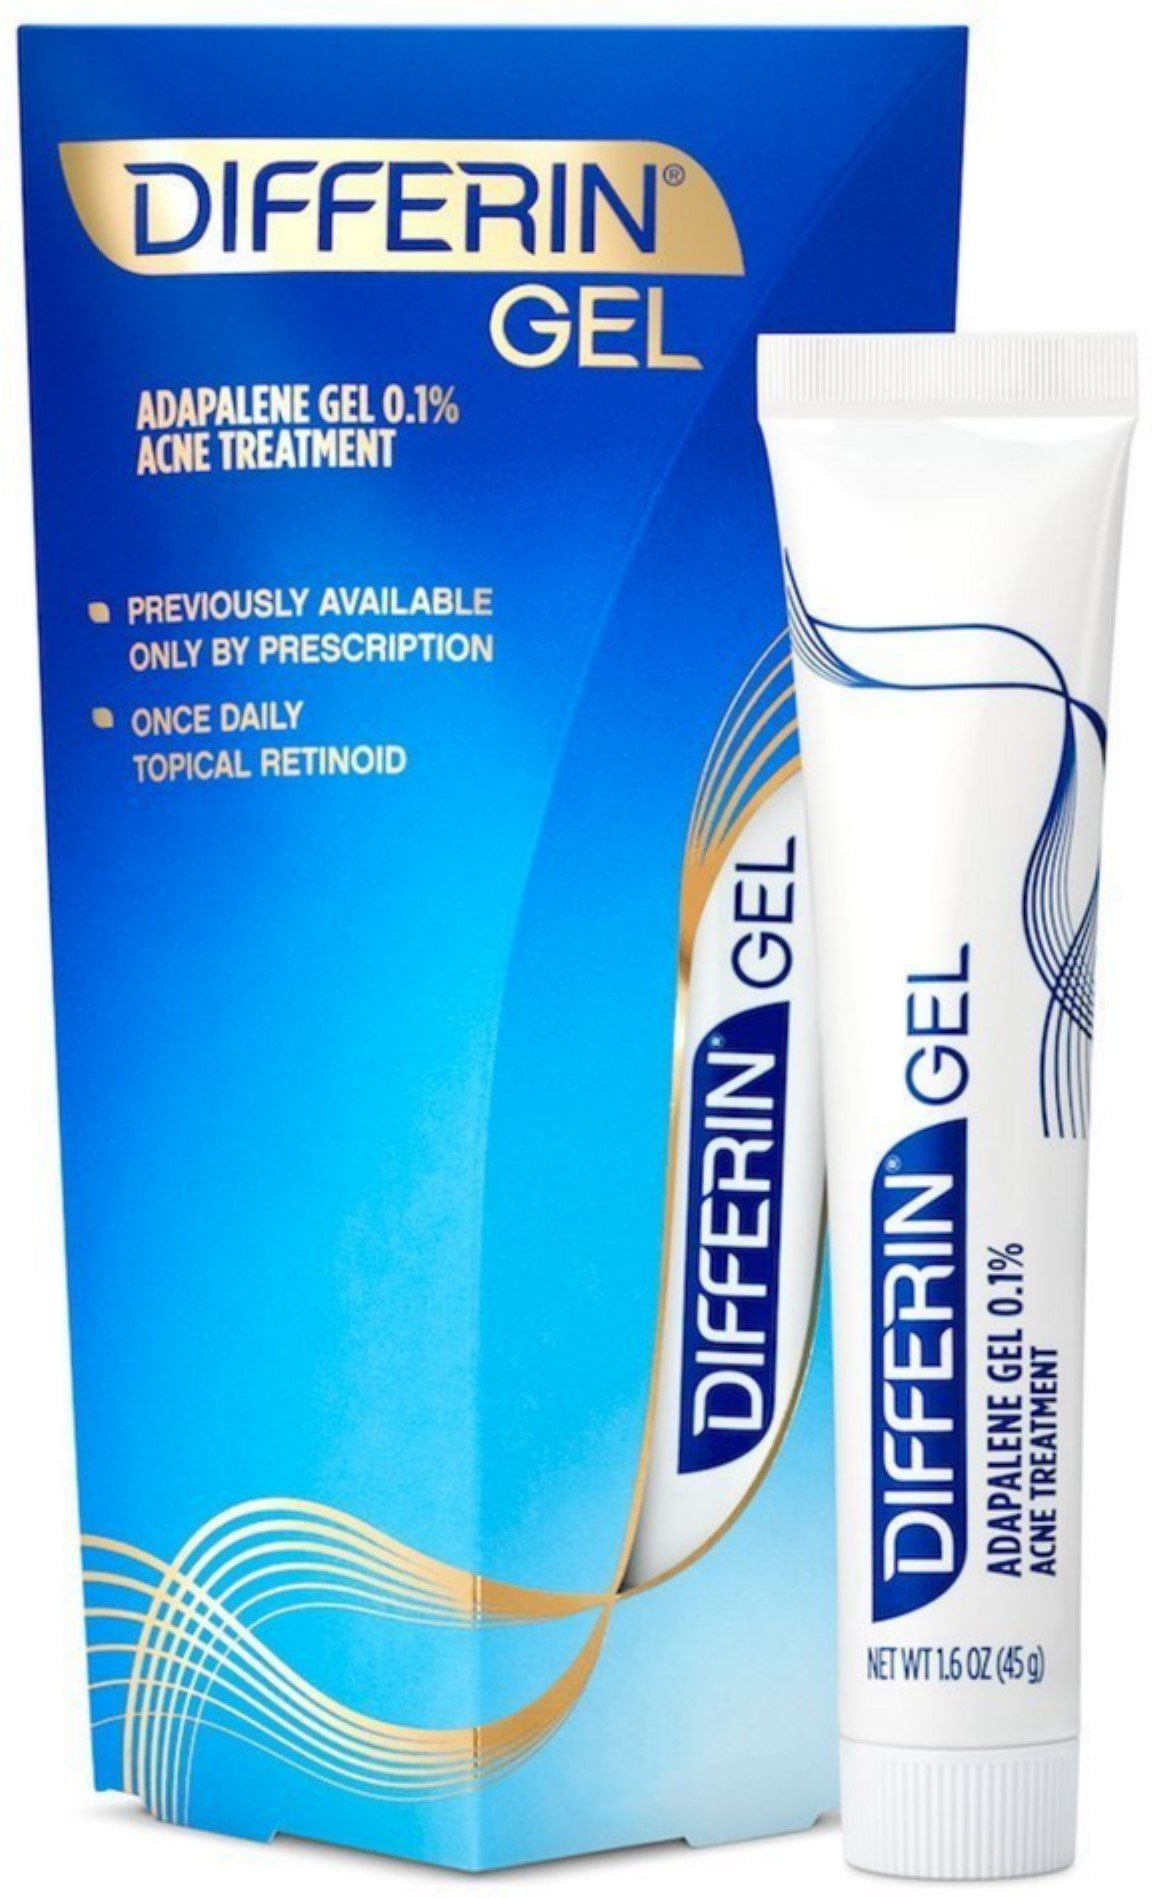 buy-differin-adapalene-gel-0-1-acne-treatment-1-60-oz-online-at-lowest